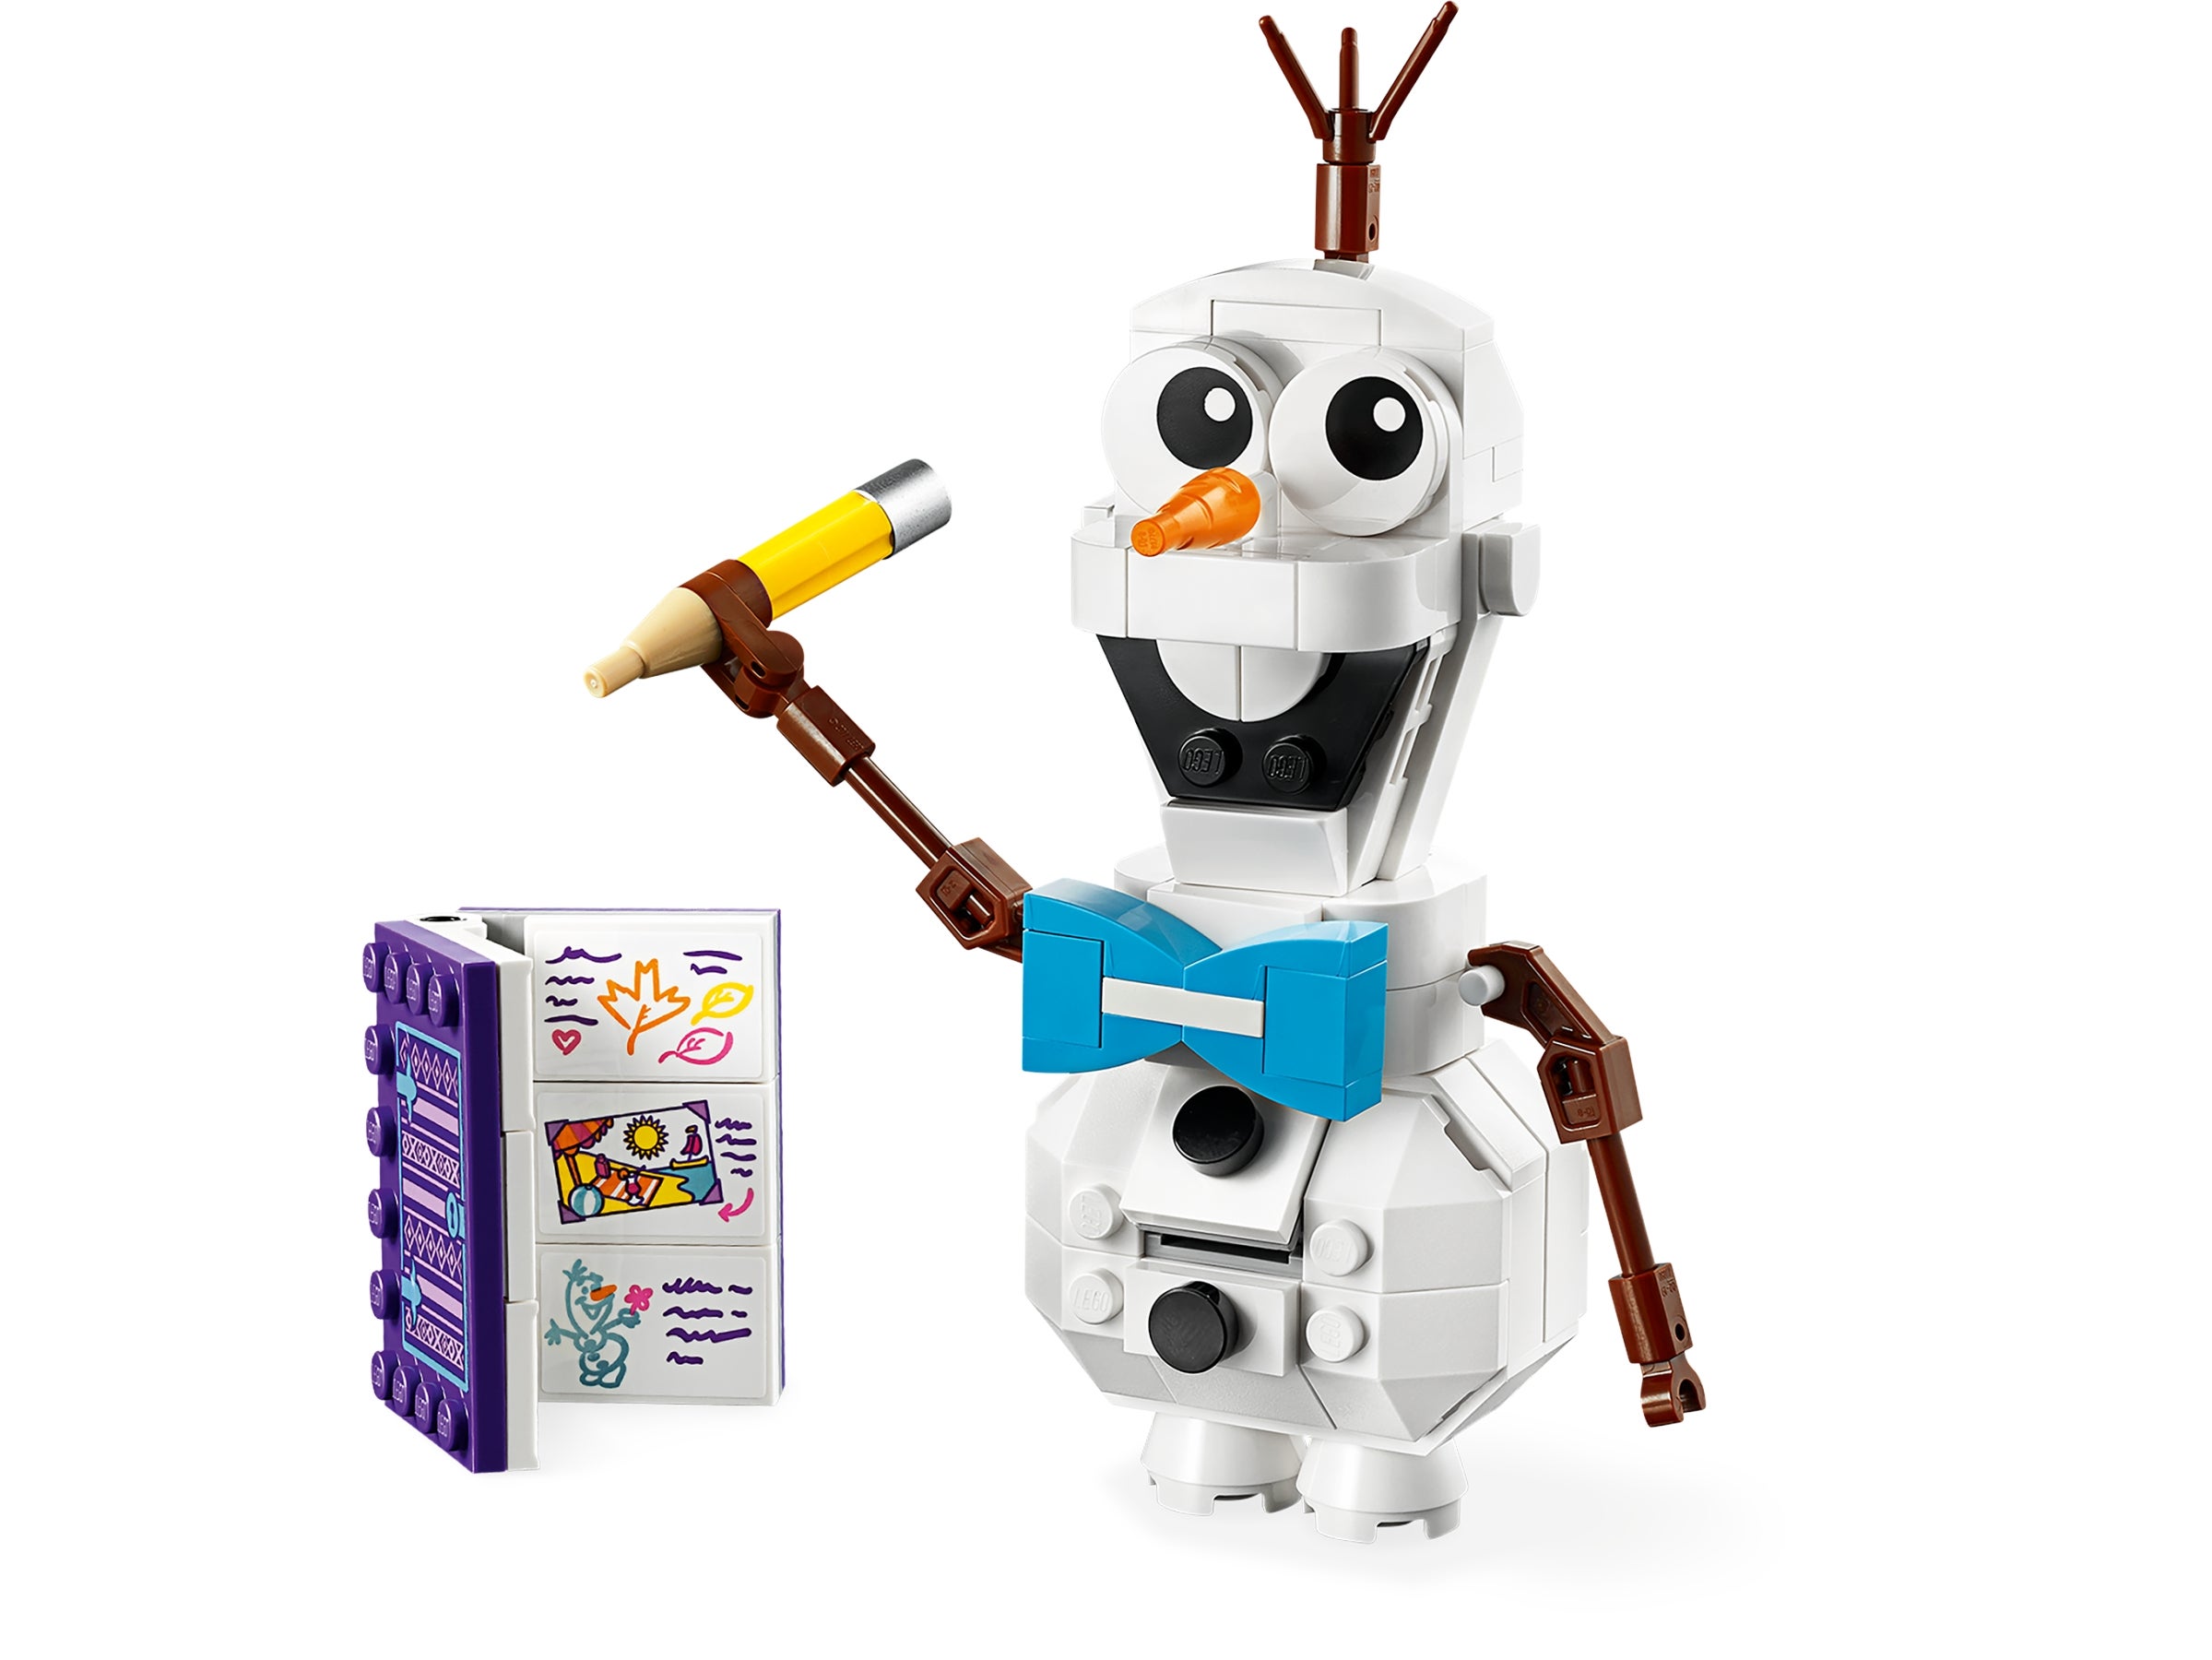 41169 Lego Disney Frozen 2 Olaf Figure Building Set